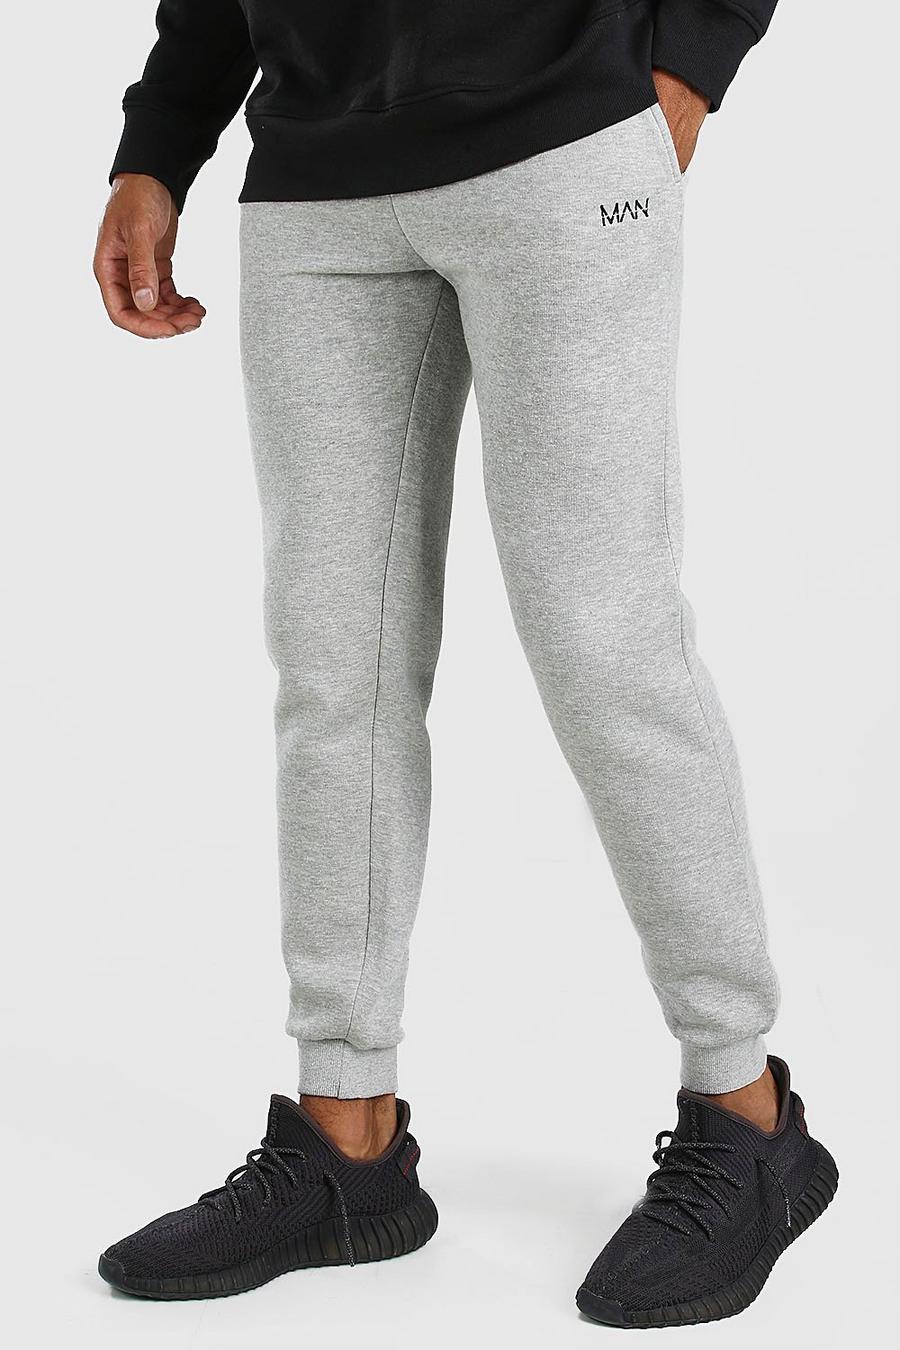 Grey Original Man Slim Fit Track Pants image number 1